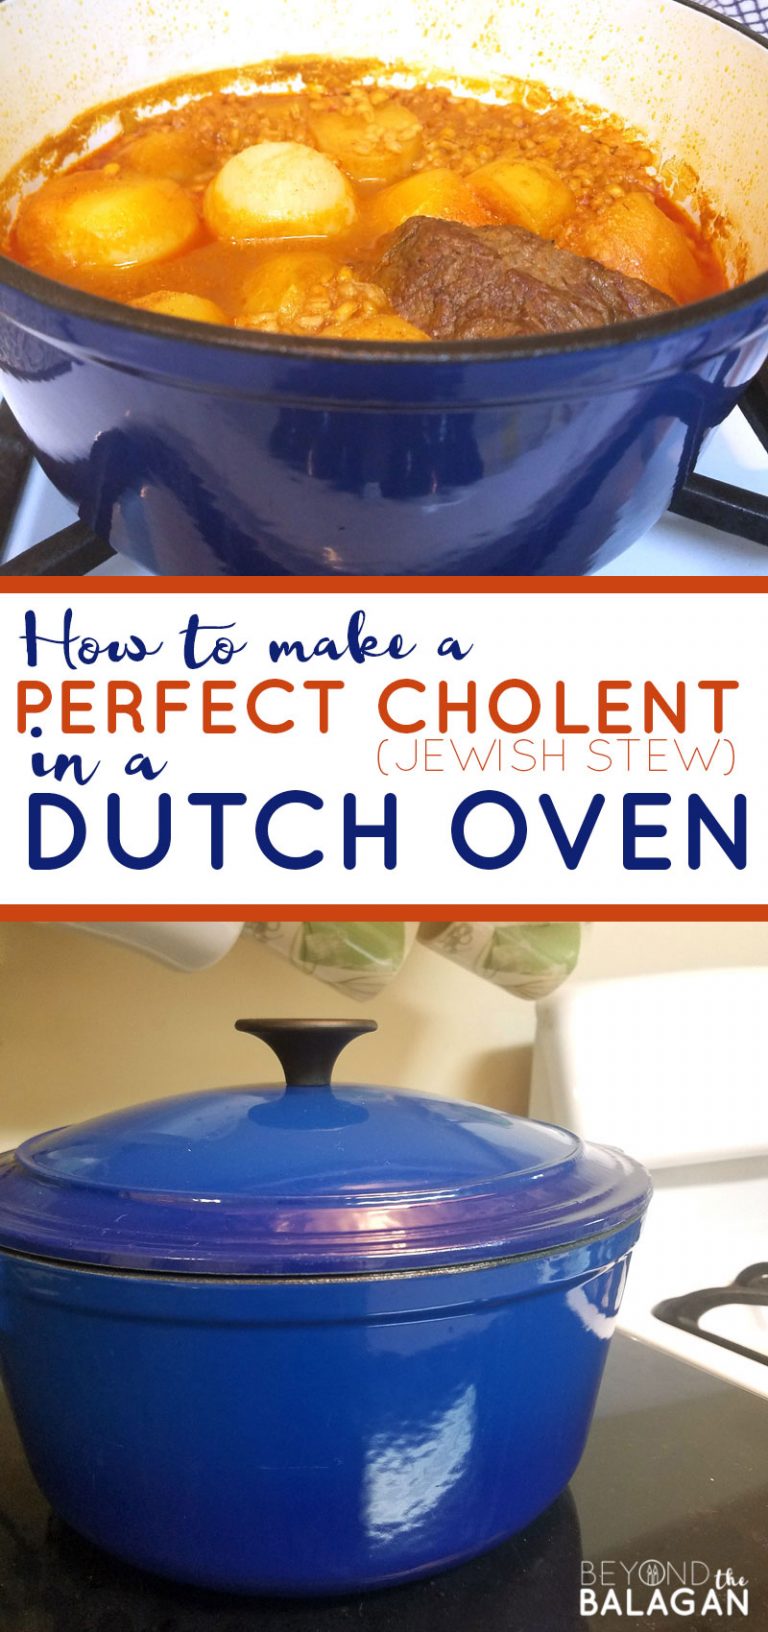 Best Cholent Recipe Ever - Jewish Overnight Stew in a Dutch Oven